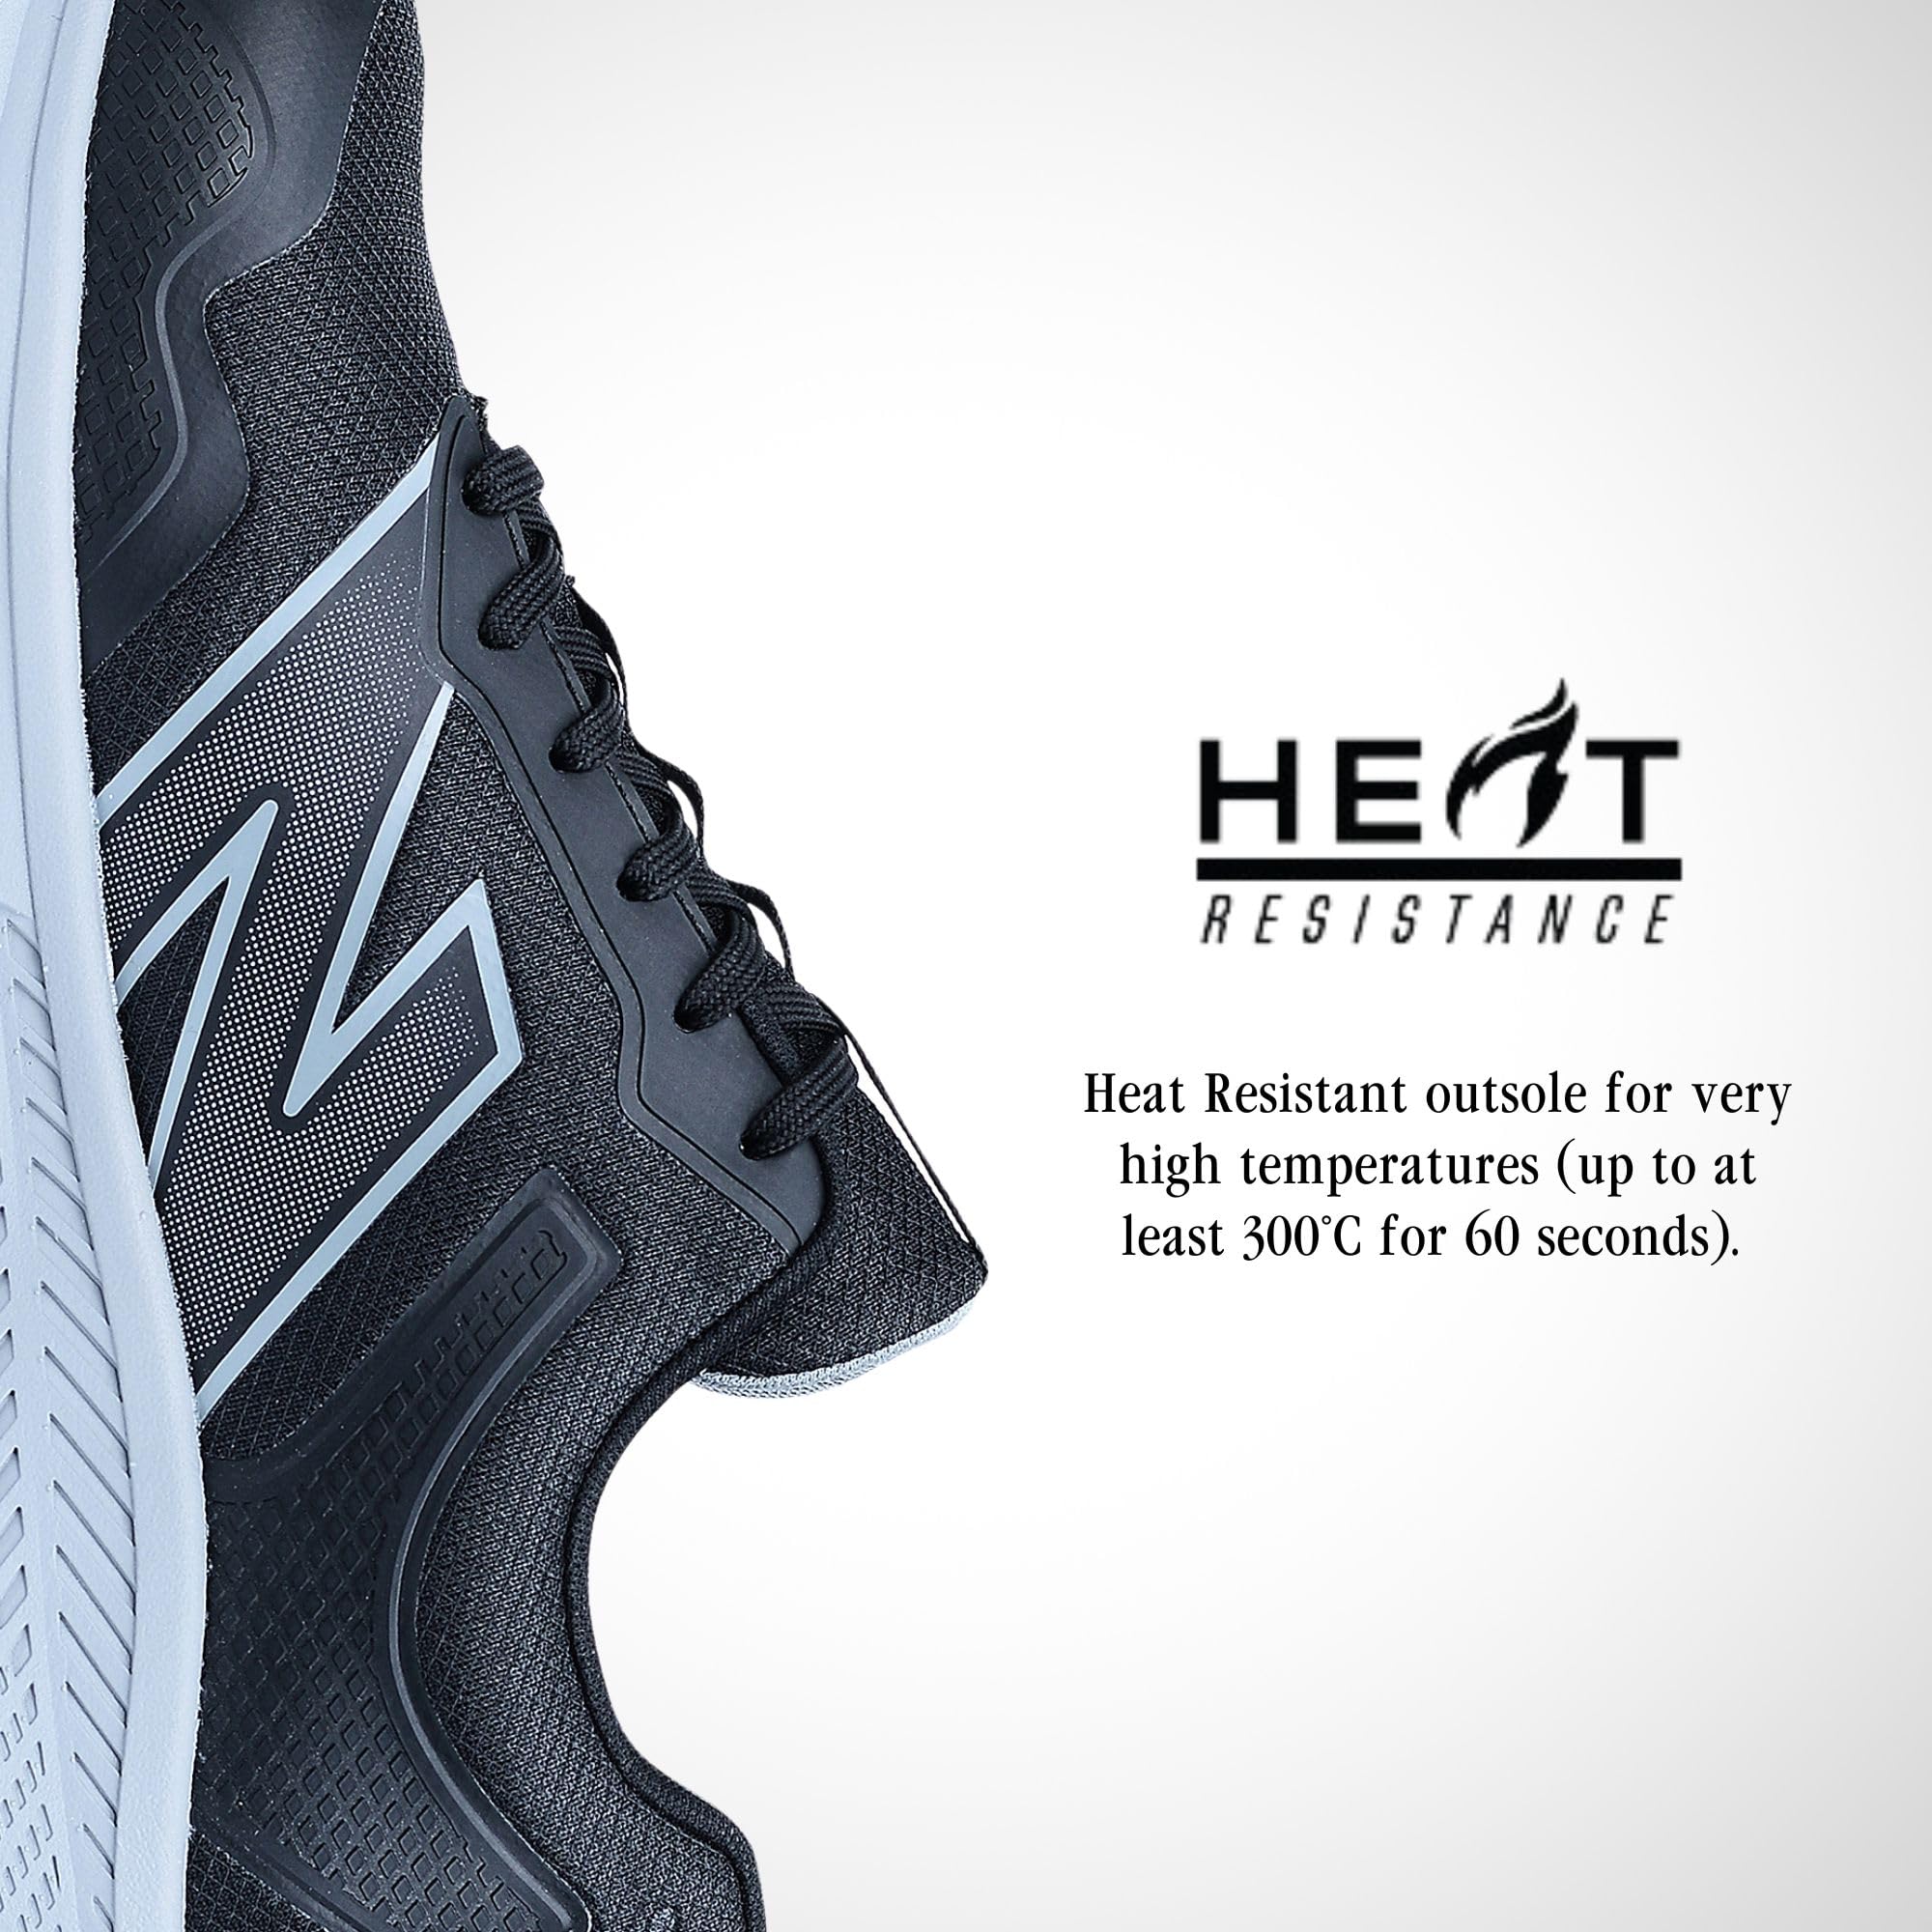 New Balance Men's Aluminum Toe Evolve Industrial Shoe, Black/Grey, 11